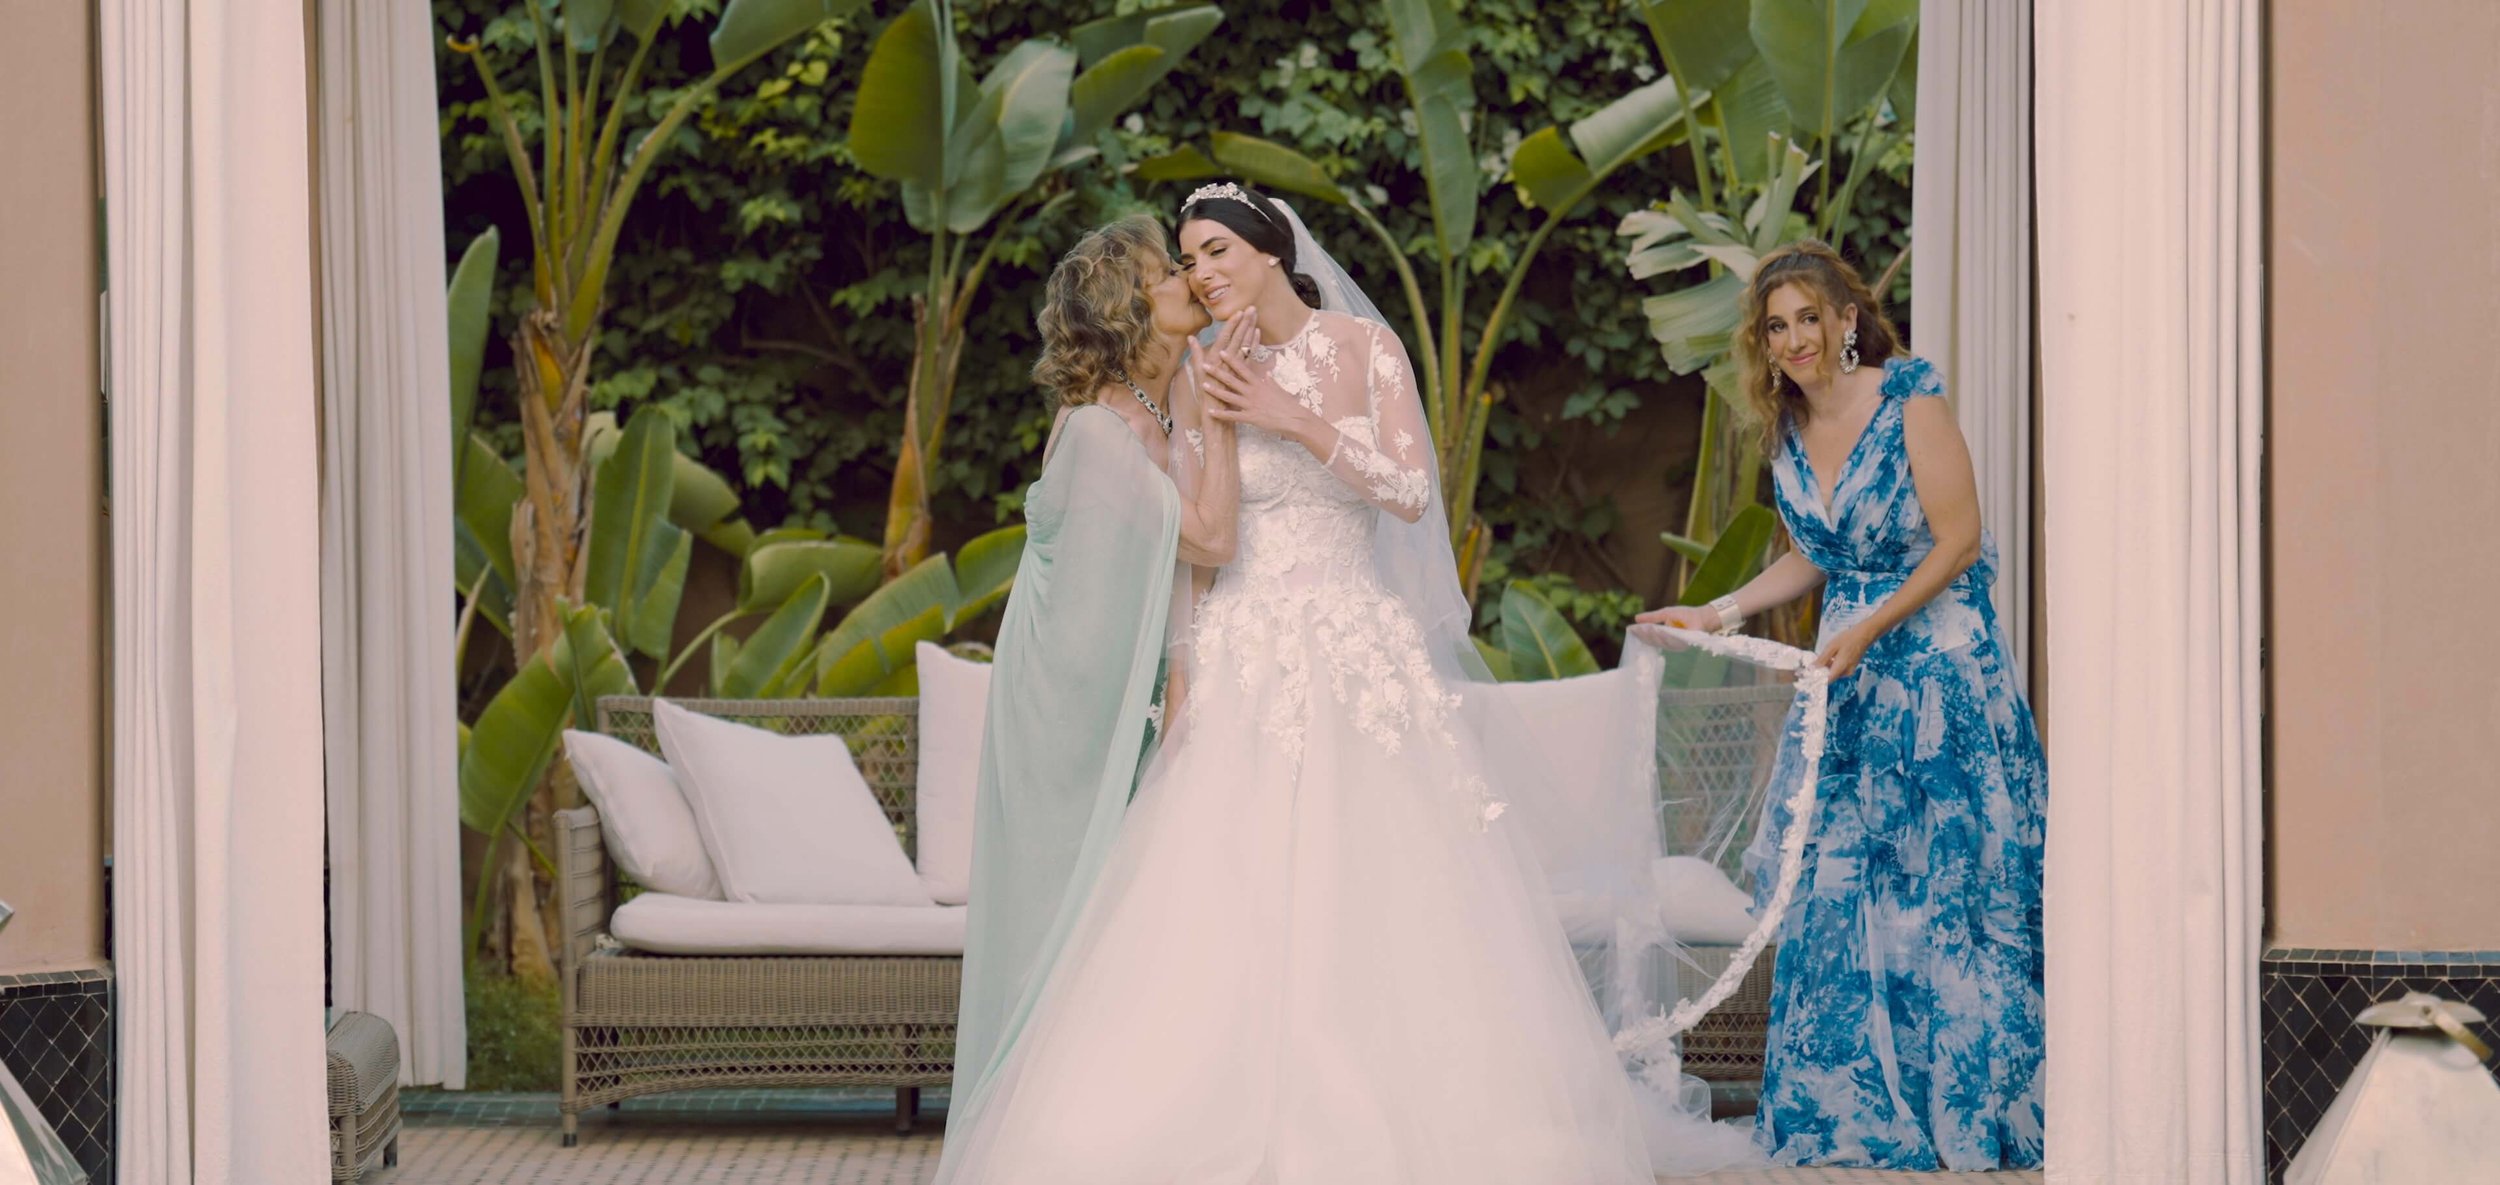 Alexandra & Raph - Wedding Film Highlight.mov_snapshot_02.10.802.jpg